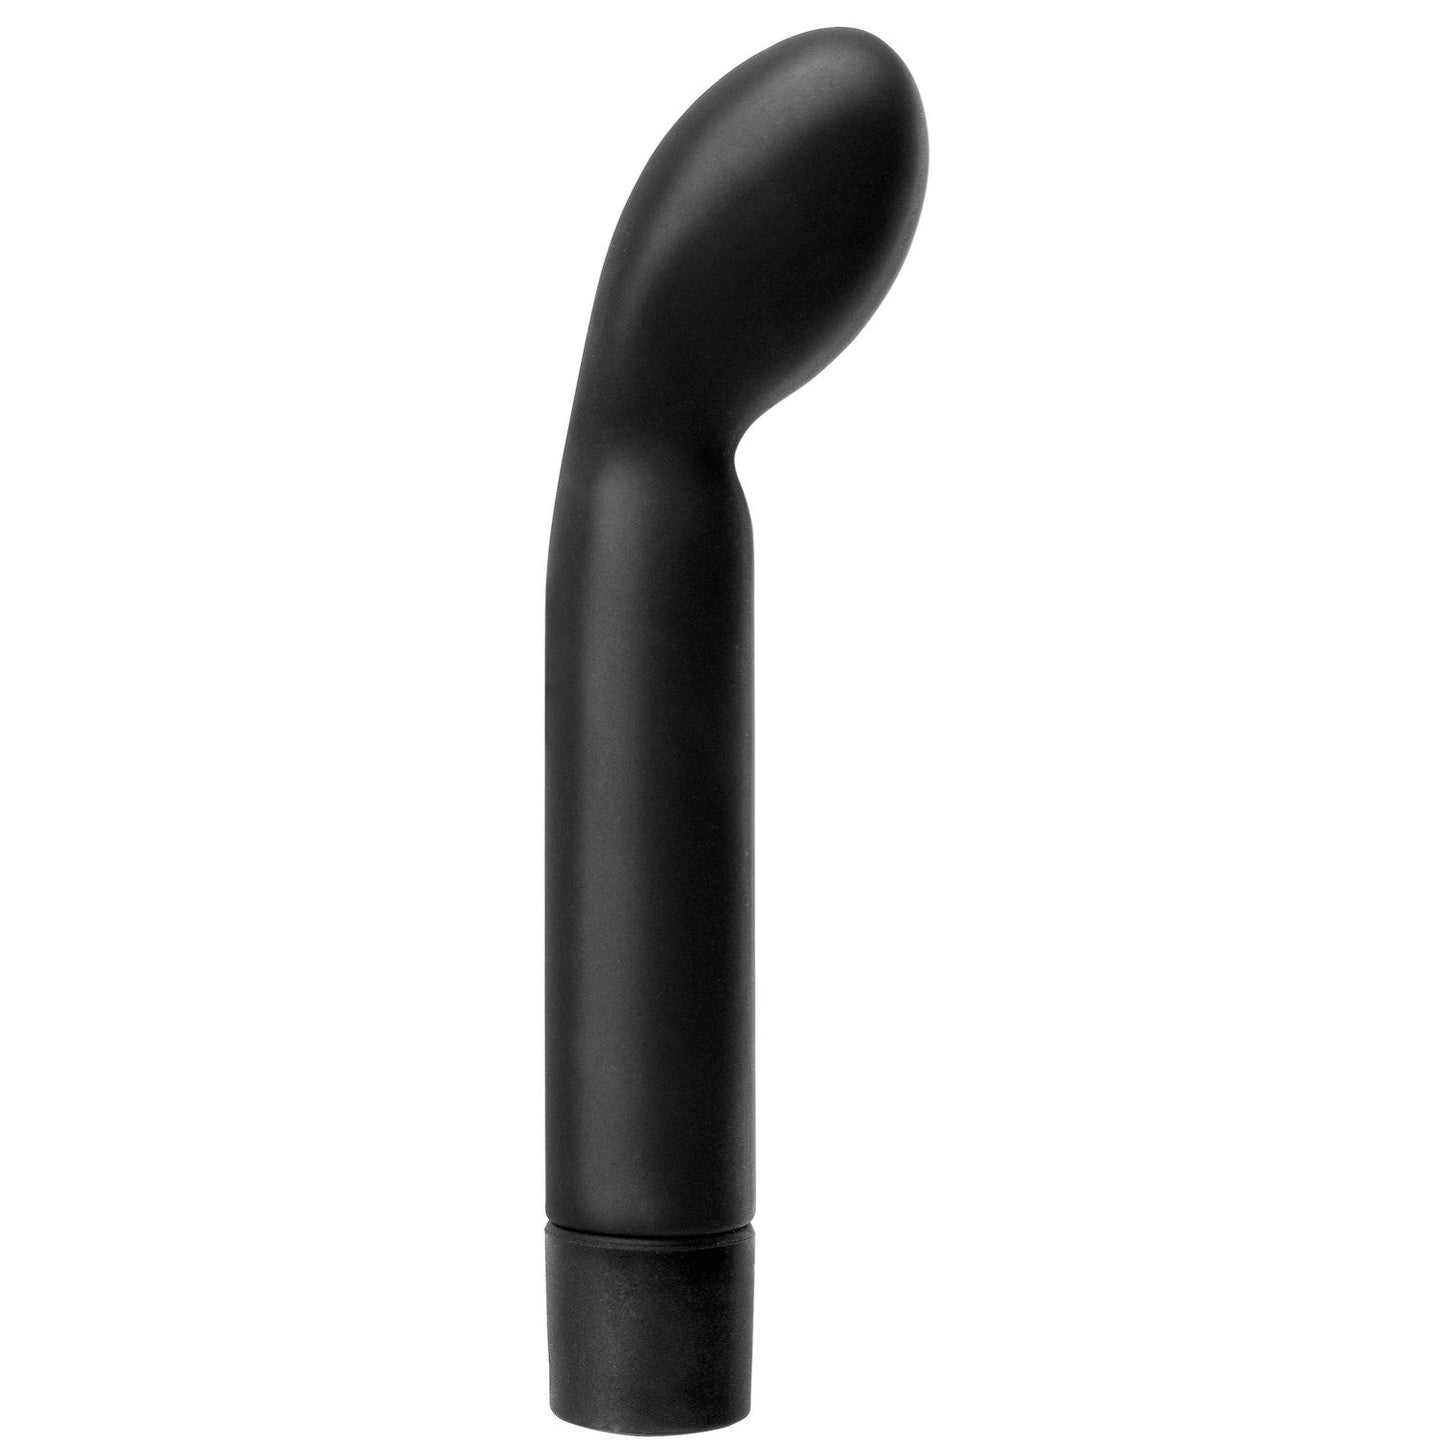 P-spot Tickler Vibe - Black 12 cm (4.75") Prostate Vibrator